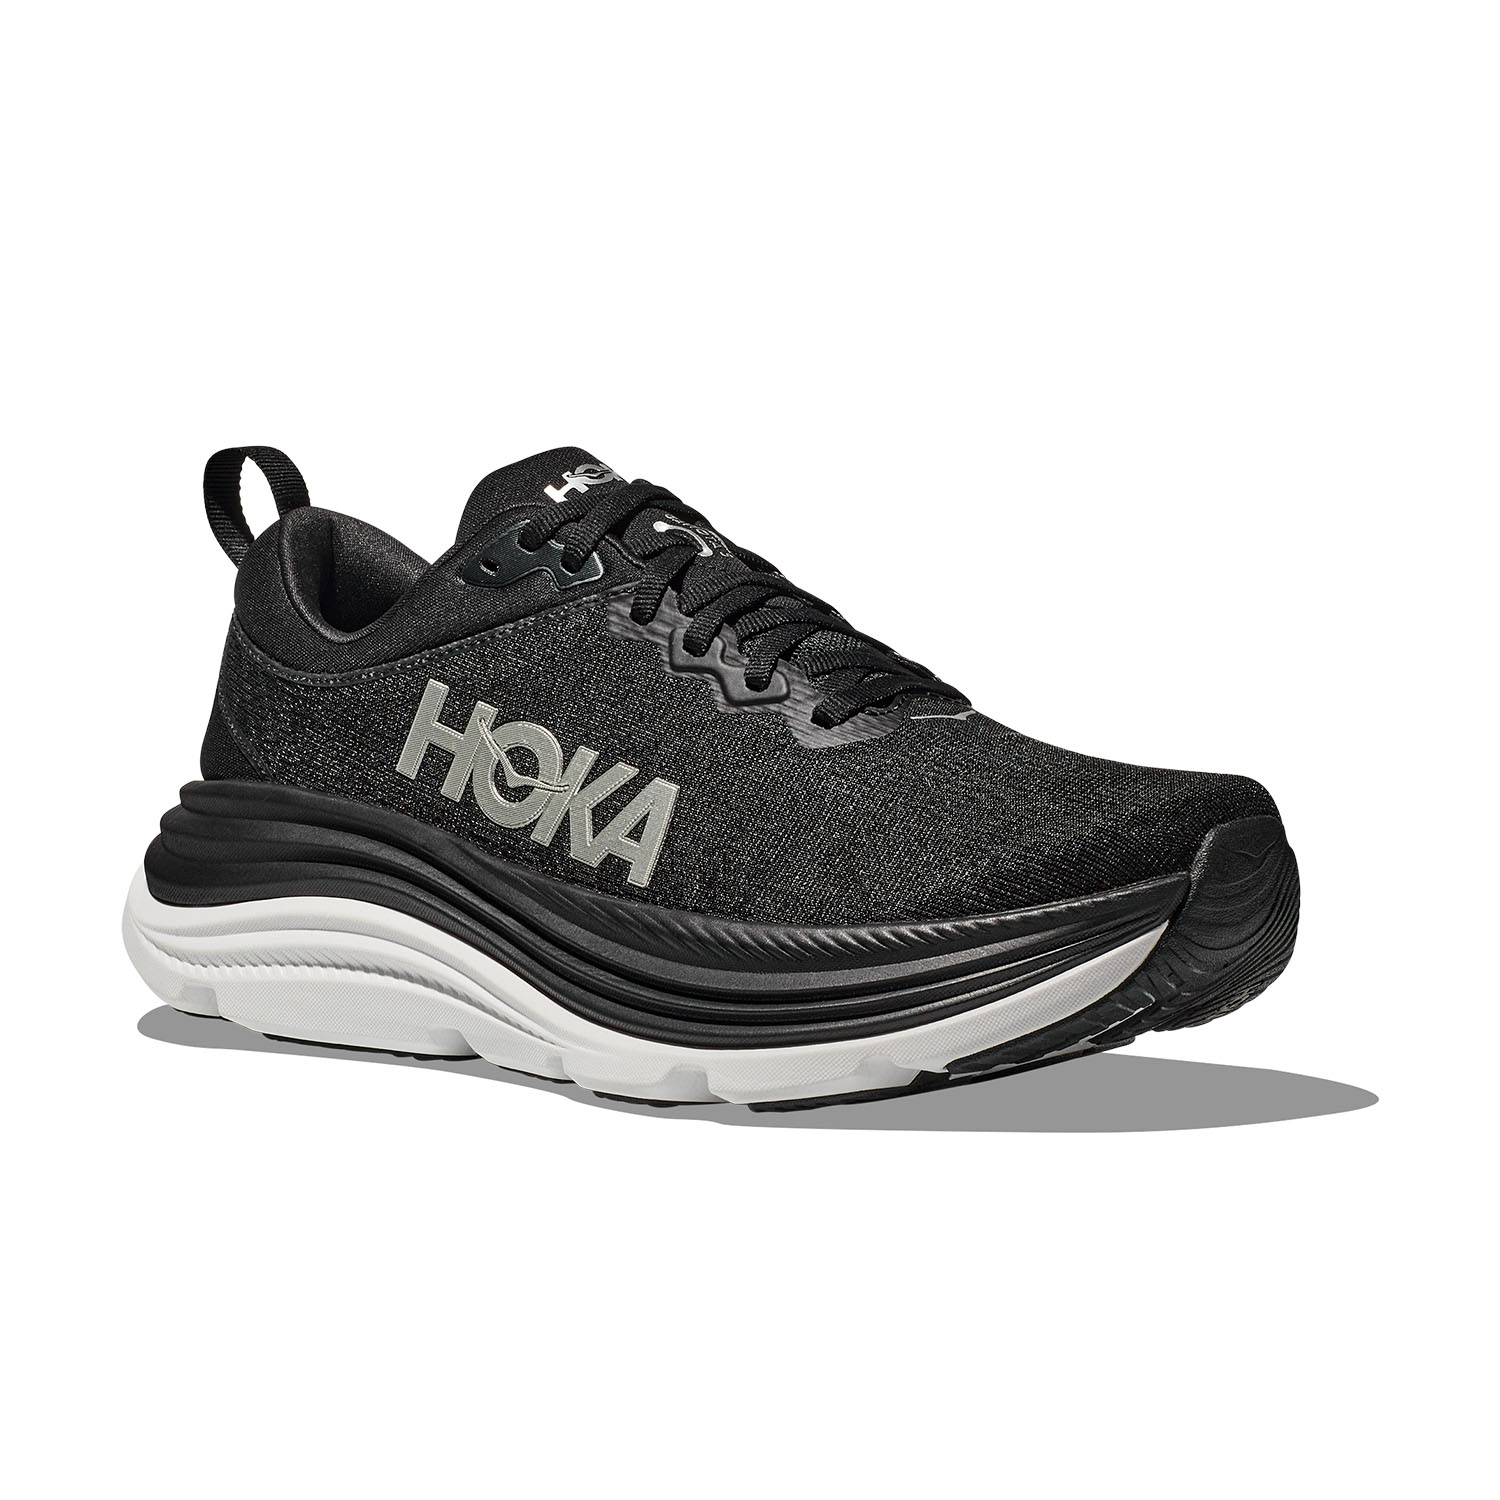 Hoka Gaviota 5 Men's Running Shoes - Black/White